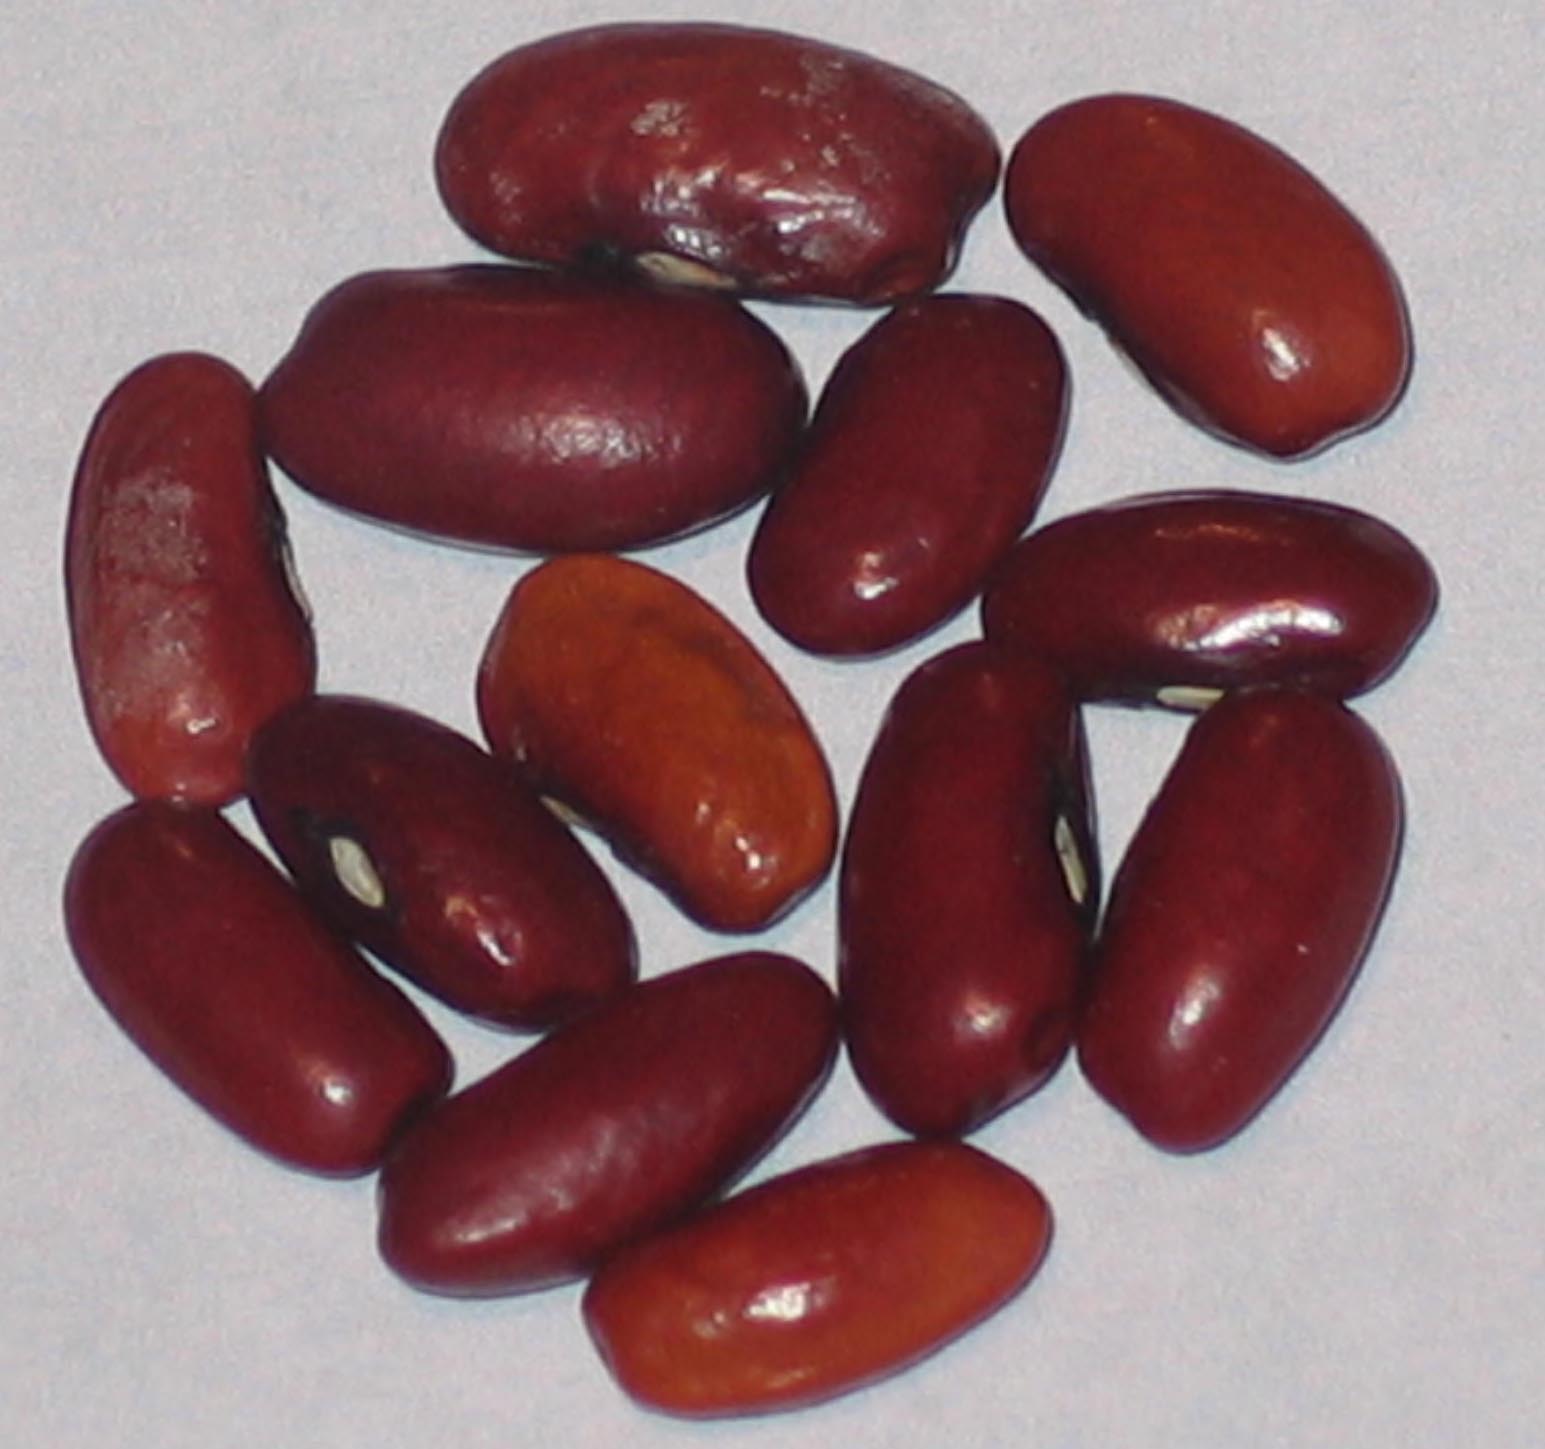 image of Carolina Red Stick beans